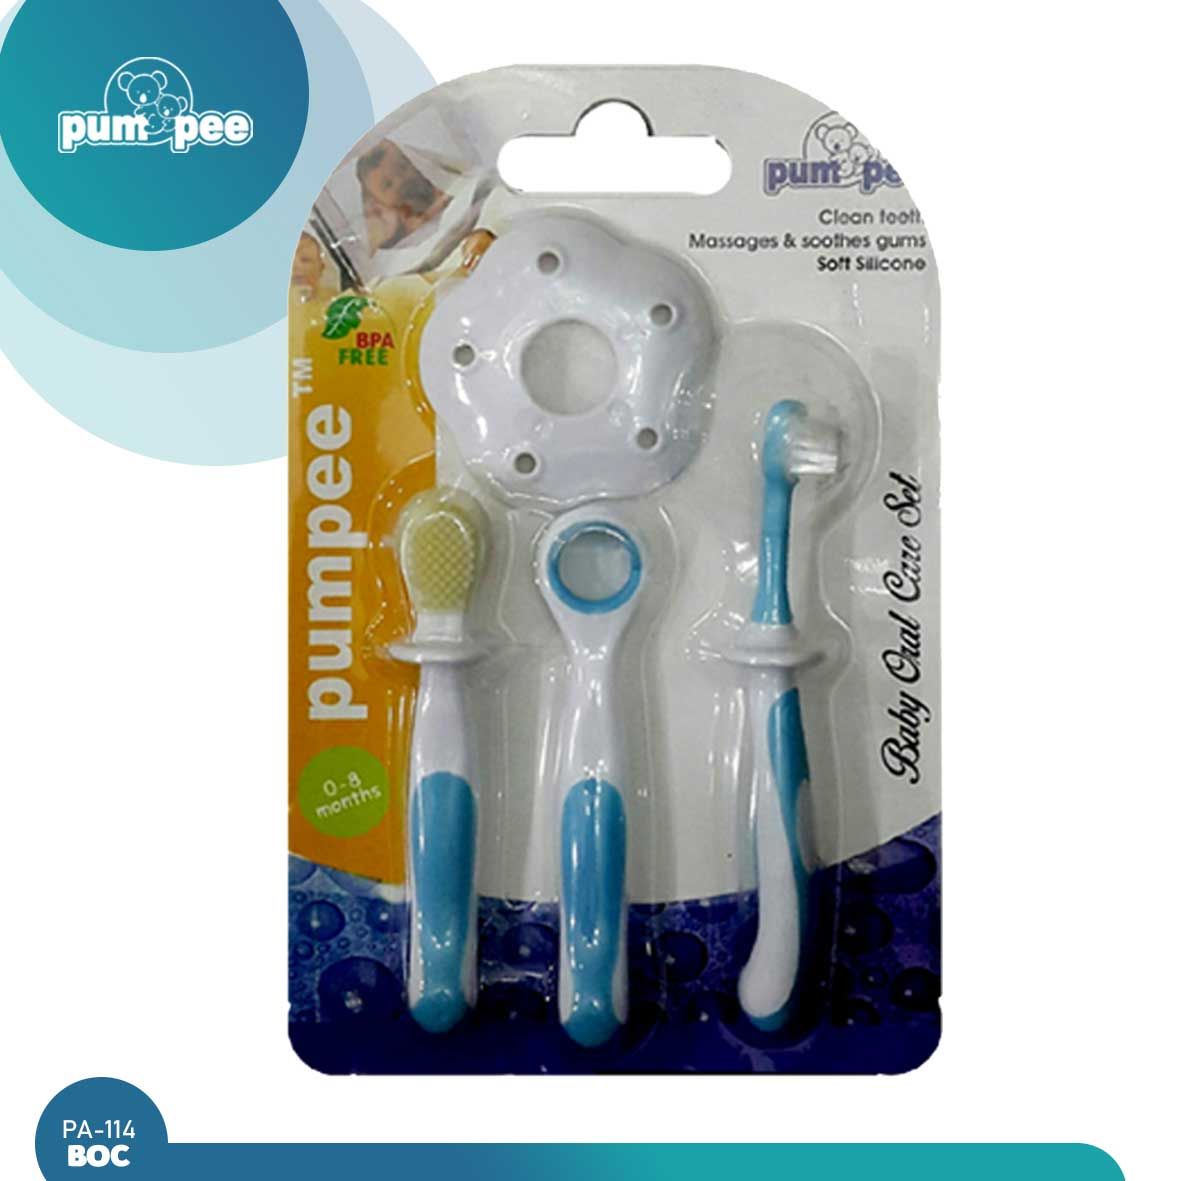 Pumpee Baby Oral Care Set | PA-114BOC - 1